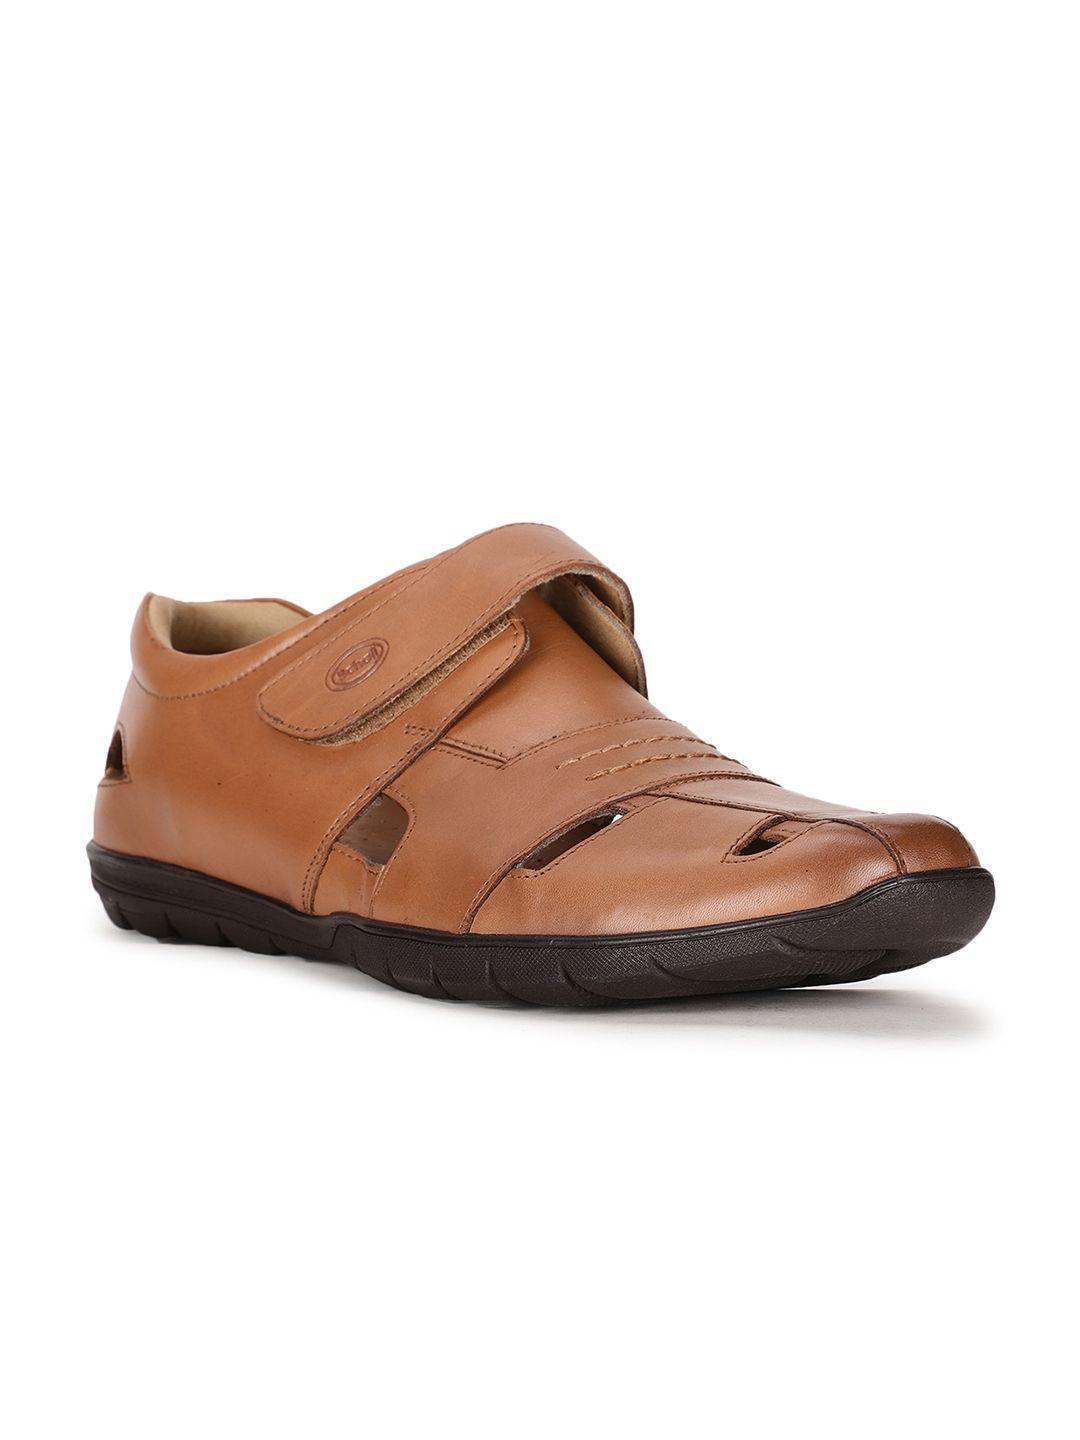 Scholl Men Tan Brown Leather Shoe-Style Sandals